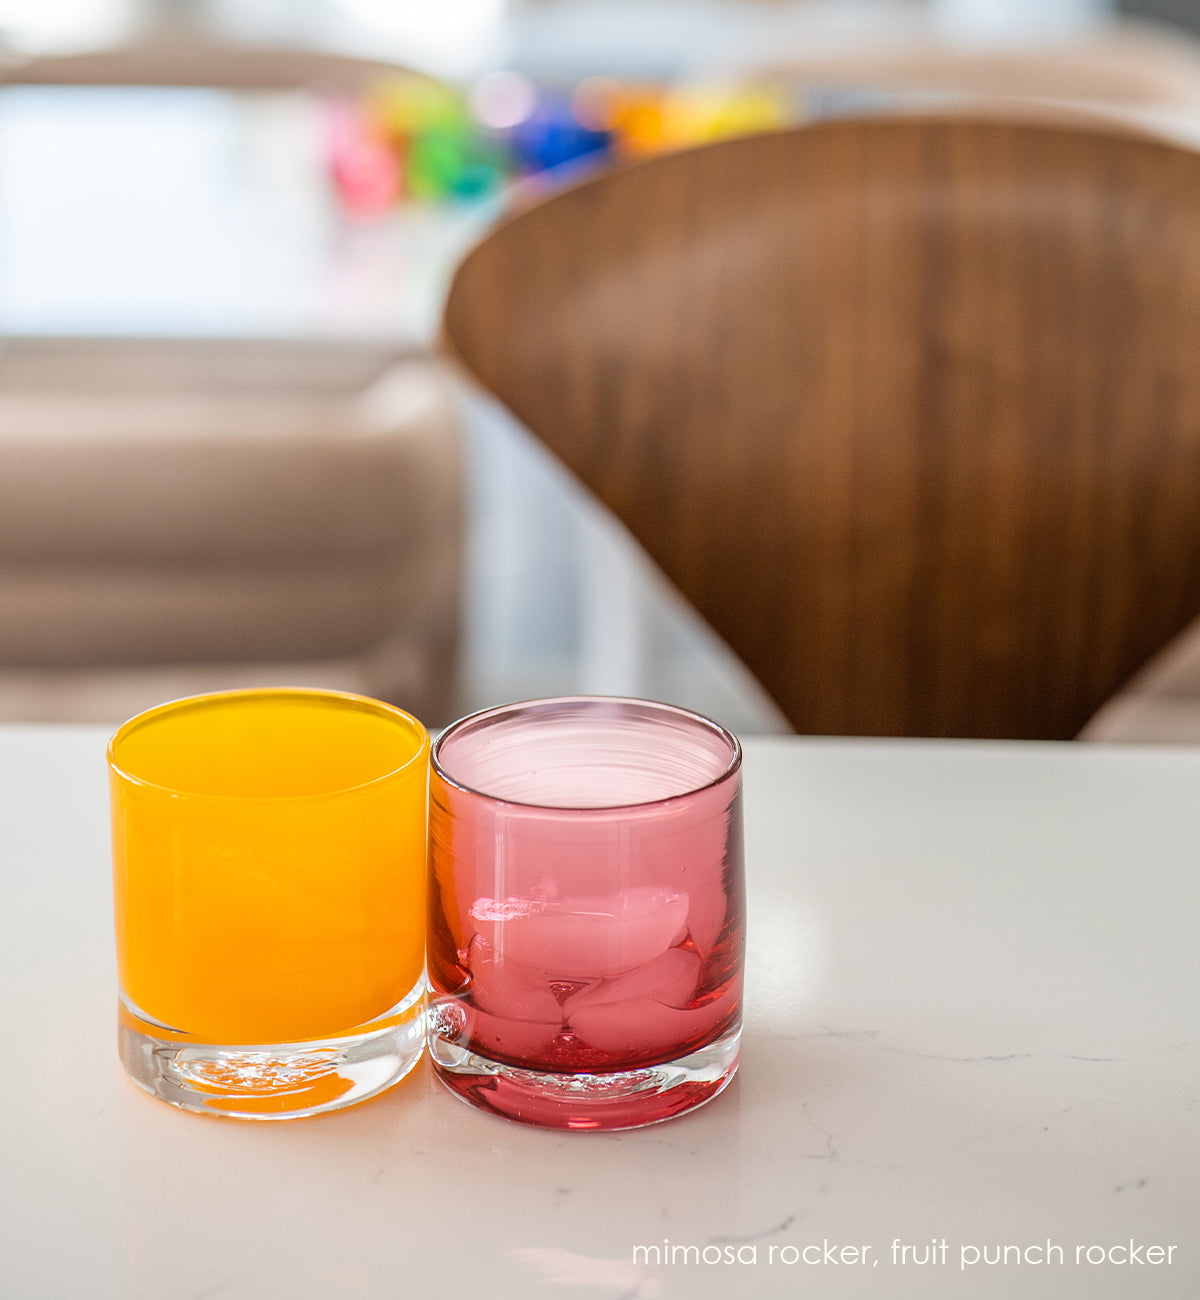 mimosa rocker, tangerine orange hand-blown lowball glass. paired with fruit punch rocker